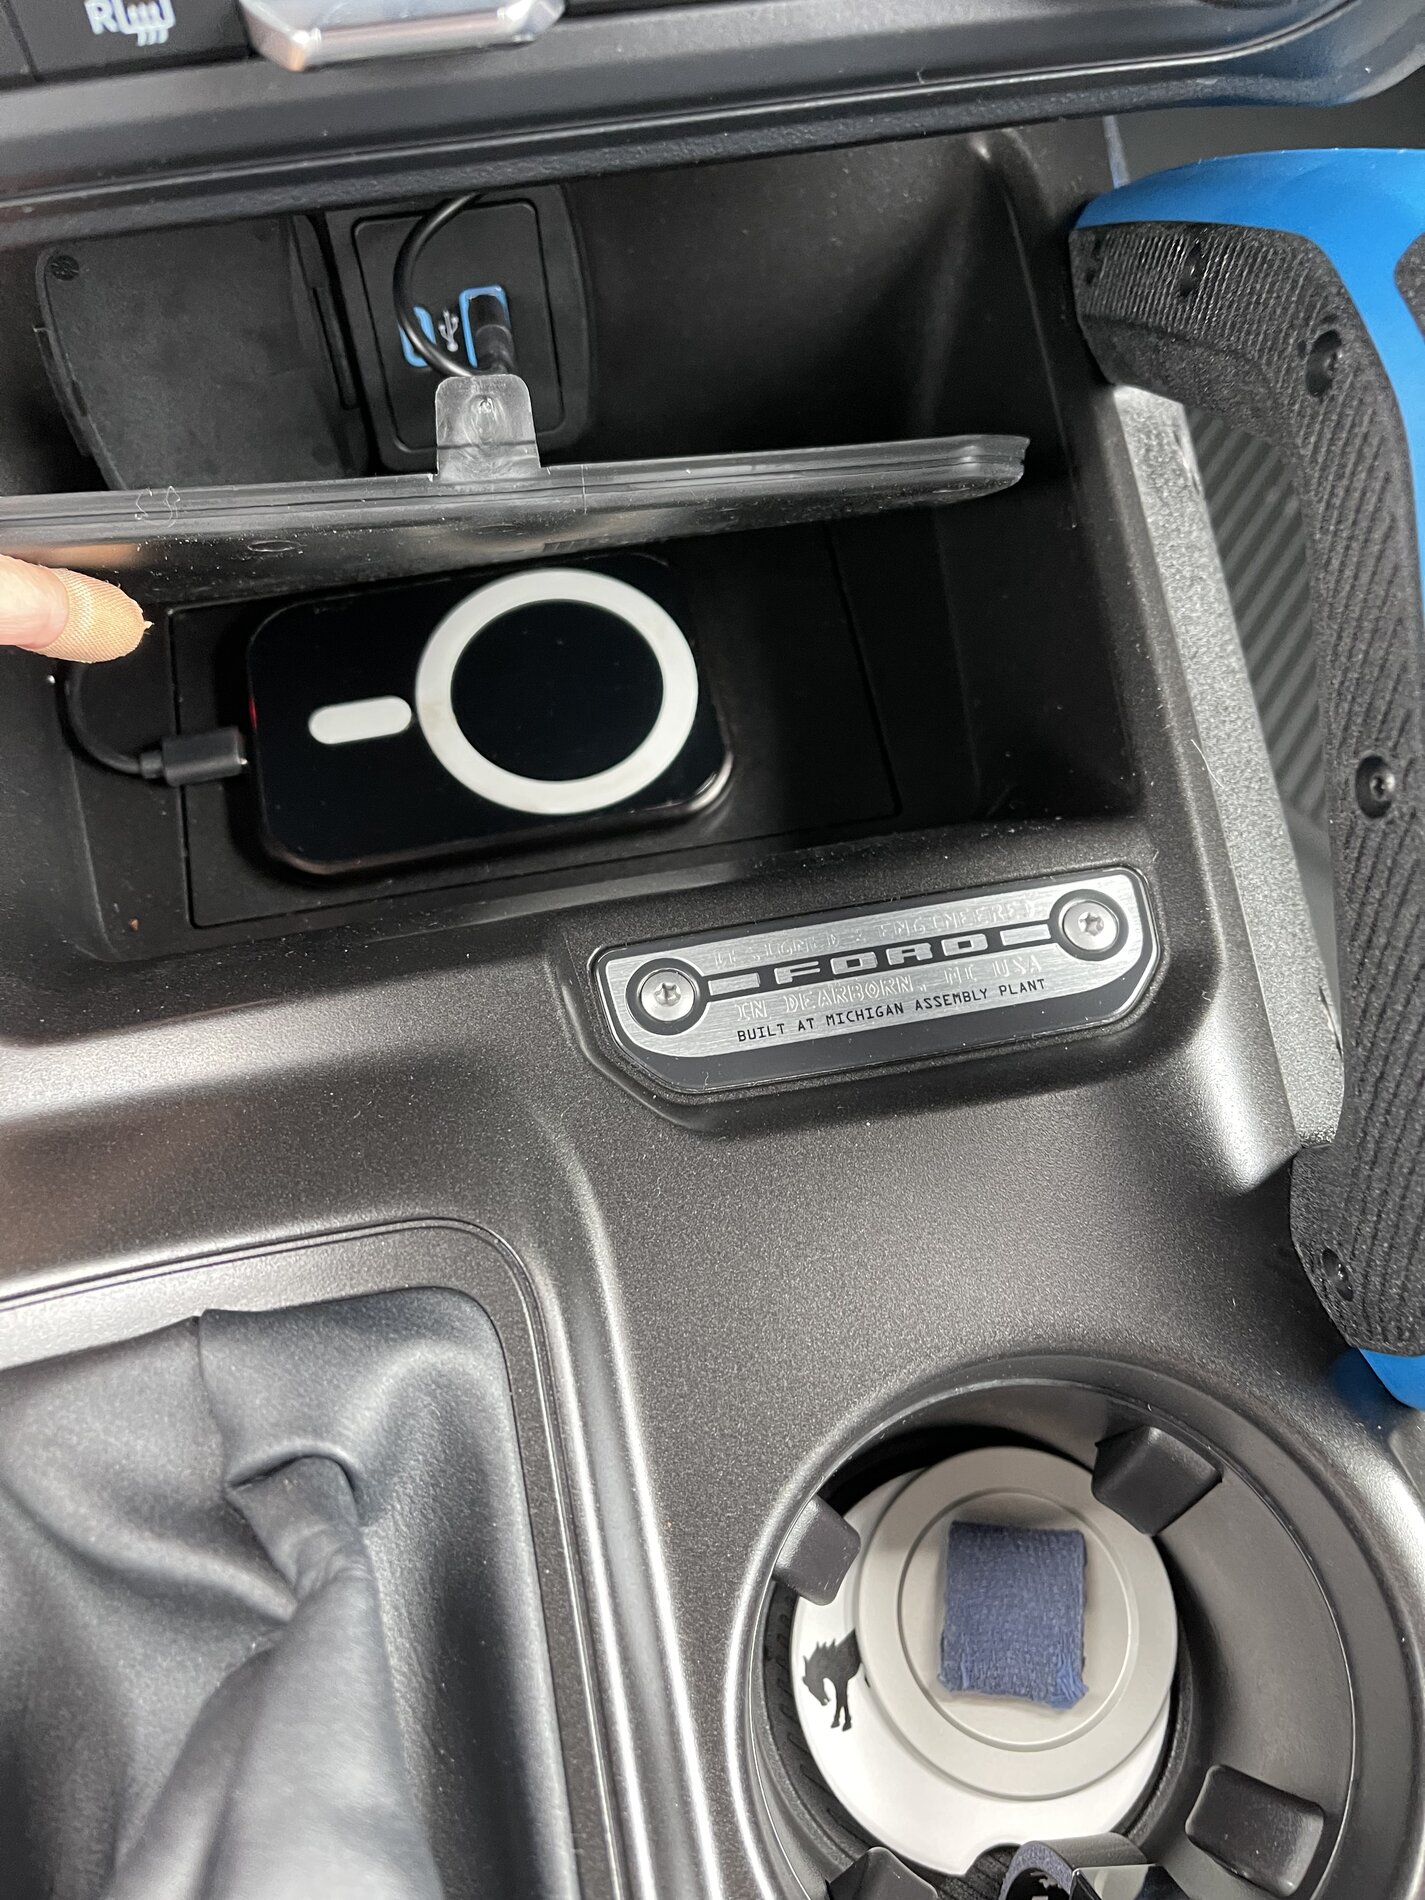 Ford Bronco Wireless charging pad DIY install hack 084C6B44-EC39-471E-A34C-CA2866E8779B